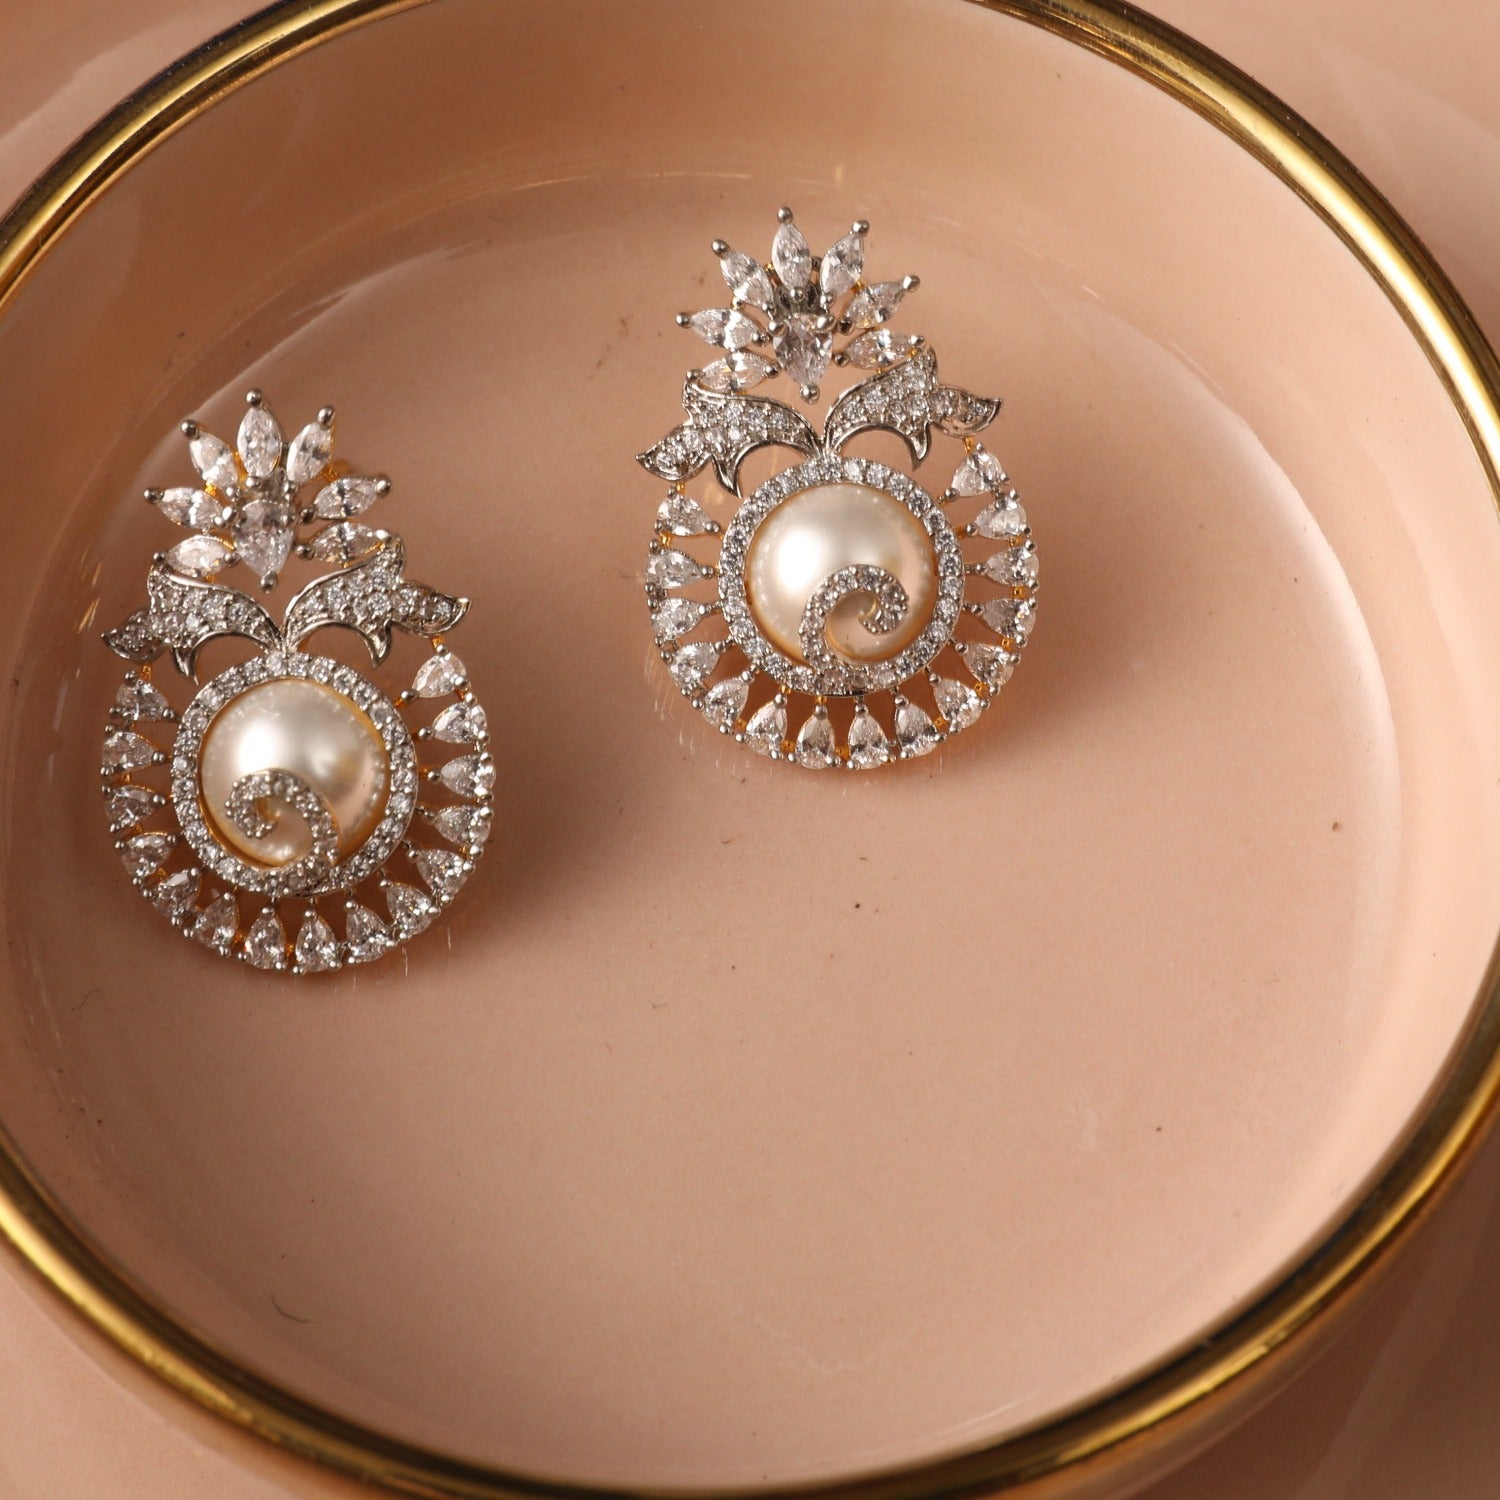 Pearl Earrings Stud Women | Natural Pearl Earrings | Korean Women Earrings  | Jewelry - Stud Earrings - Aliexpress